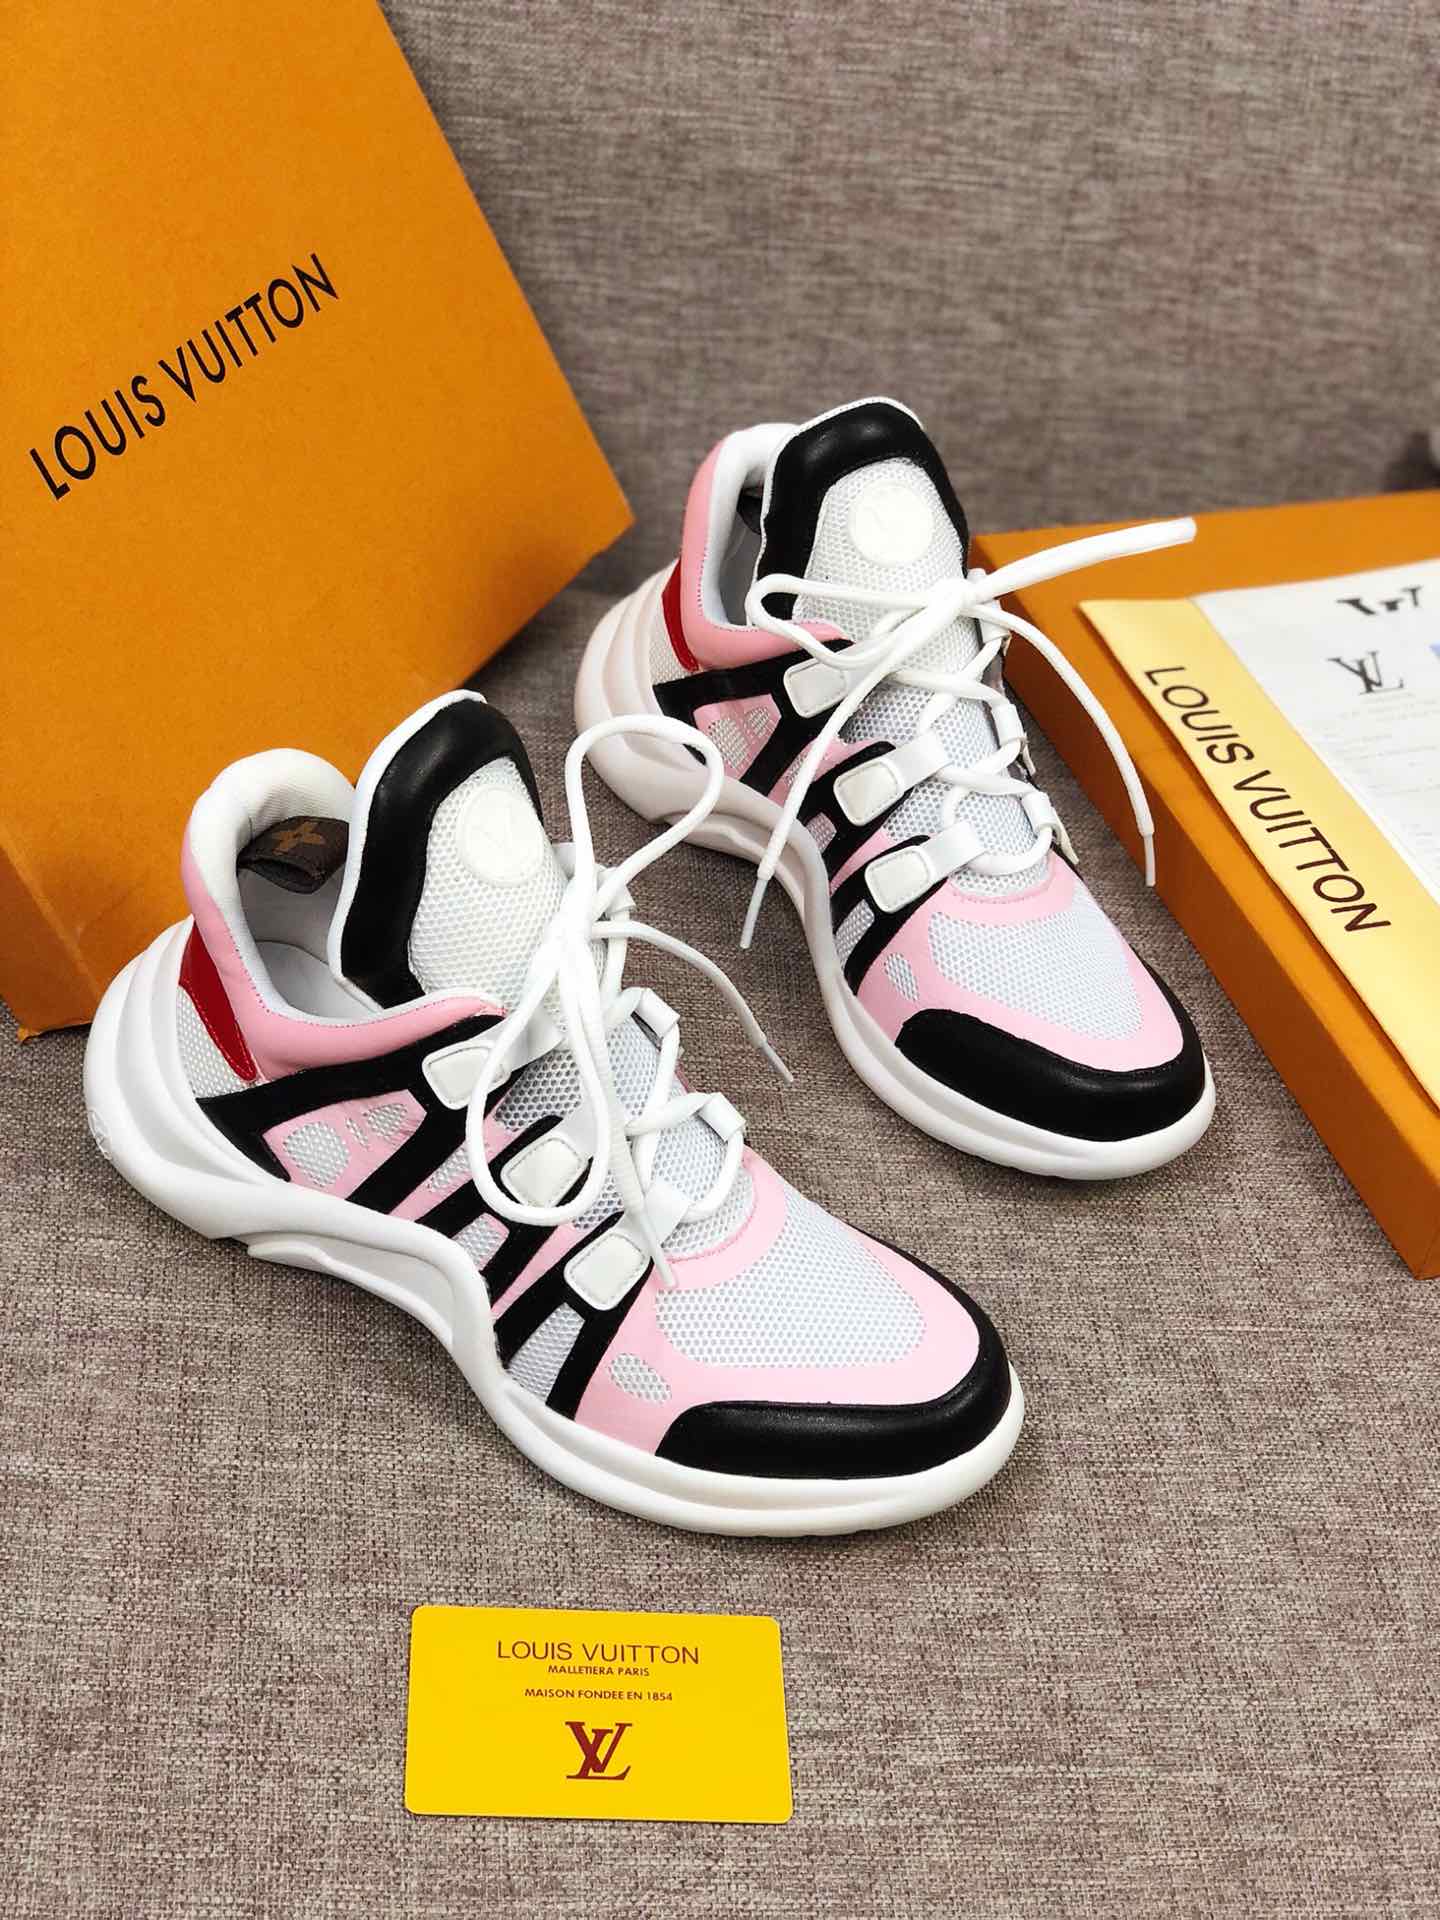 EI -LUV Archlight Pink Black Sneaker